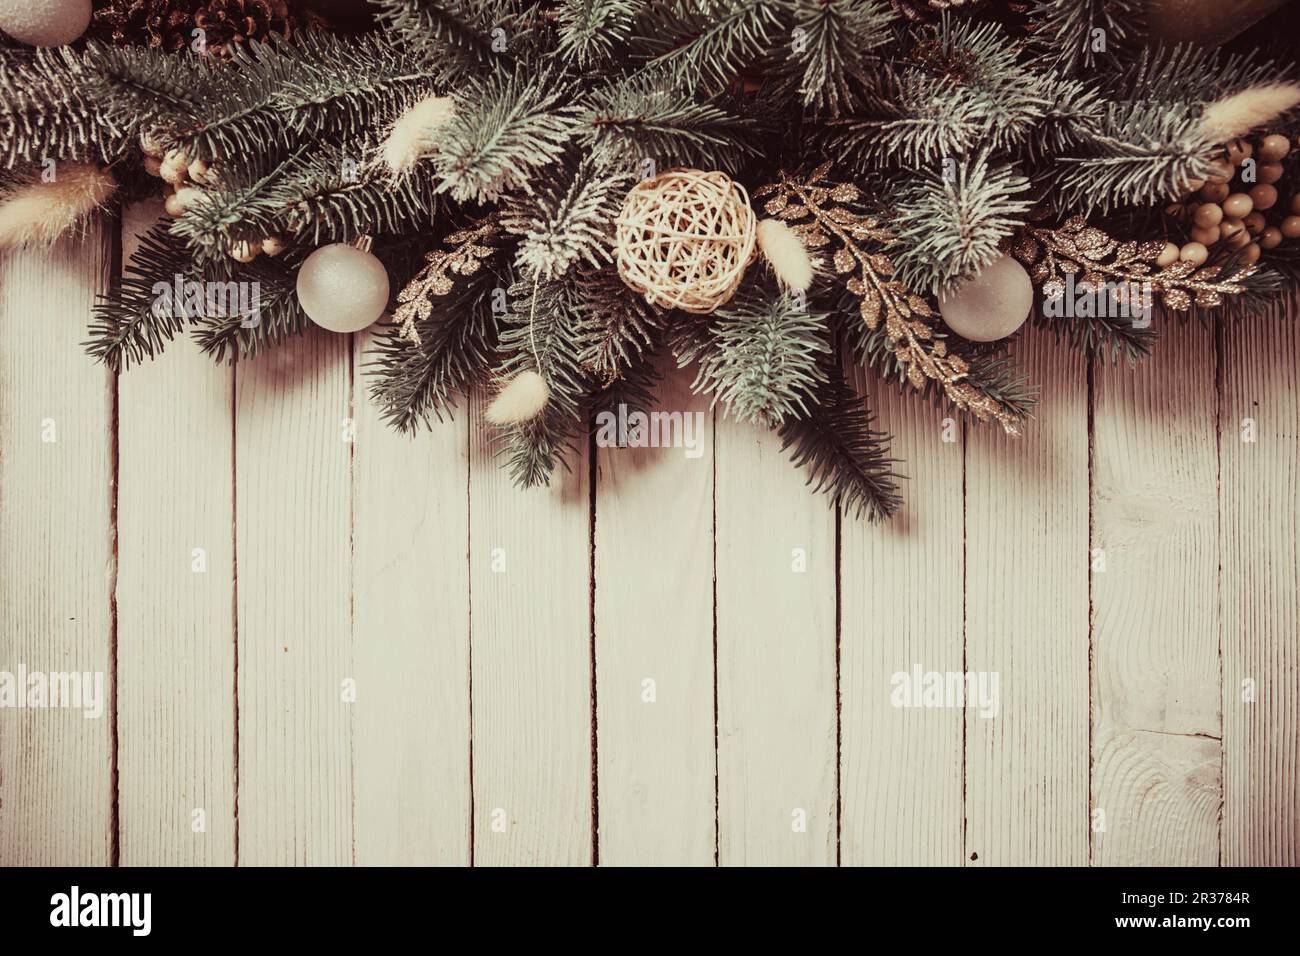 Christmas snowy border design Stock Photo - Alamy